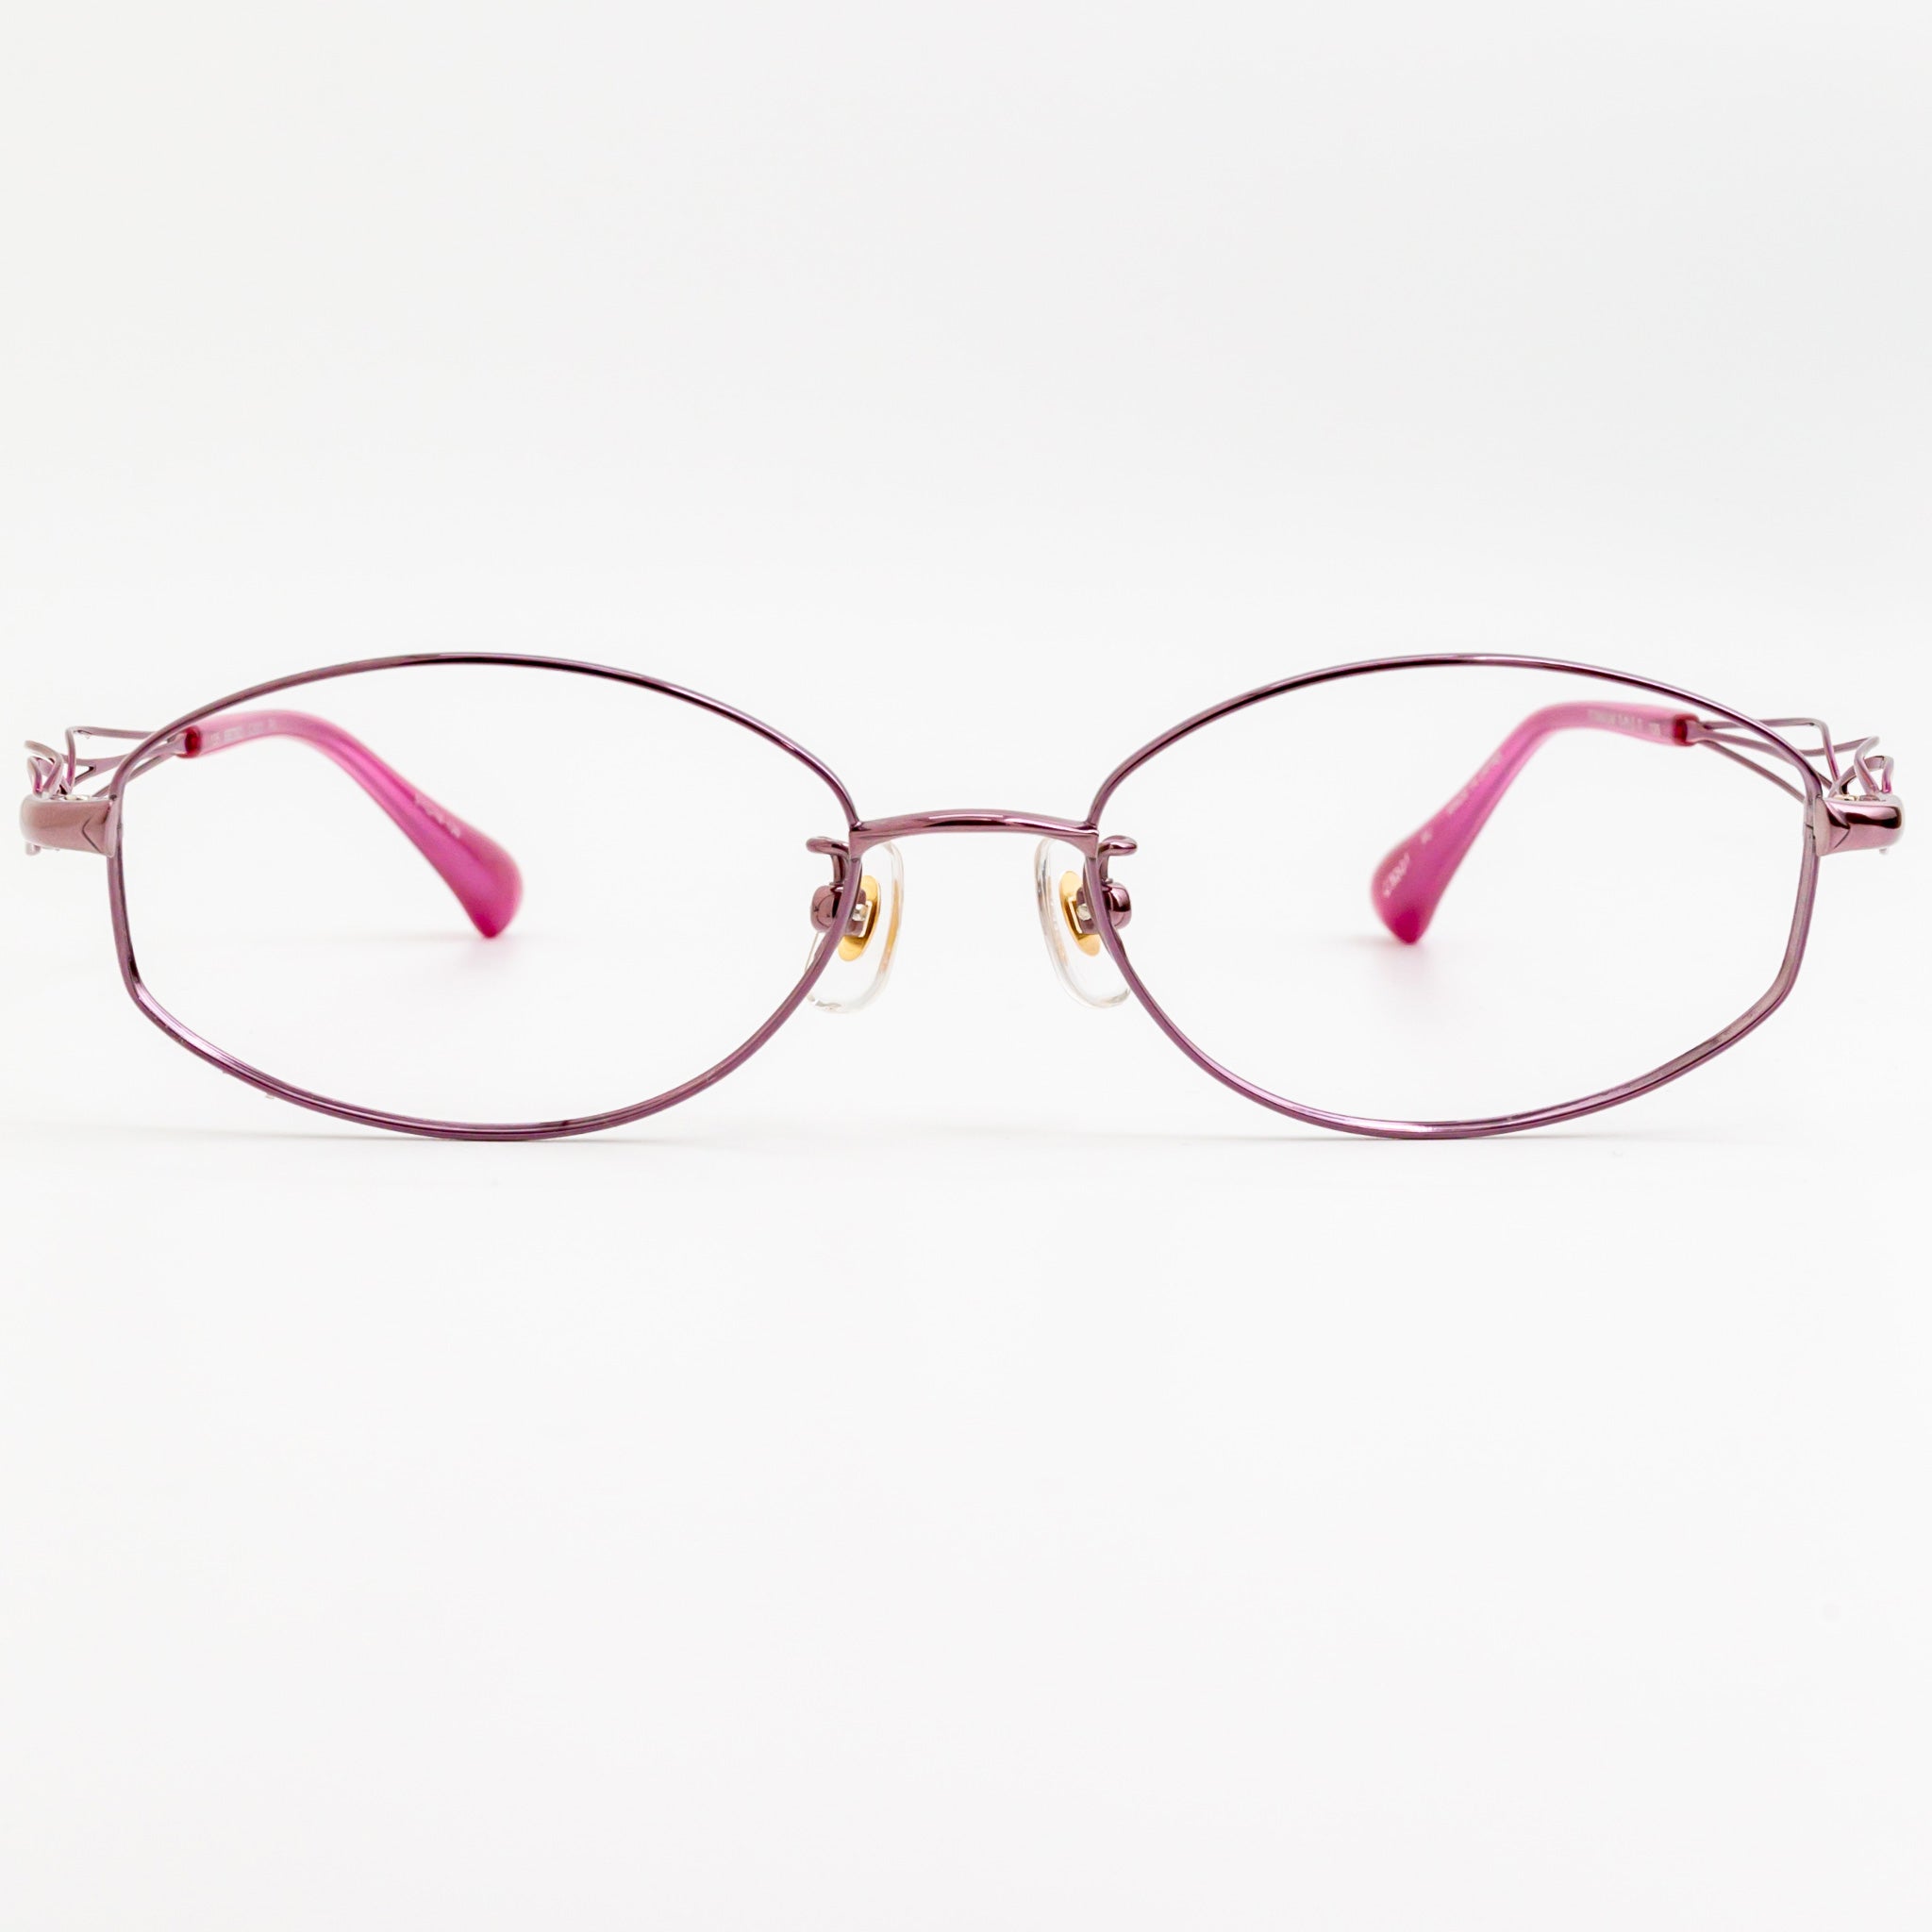 SEIKO - セイコー - 商品一覧 | メガネの通販ならちゃんとメガネ (眼鏡